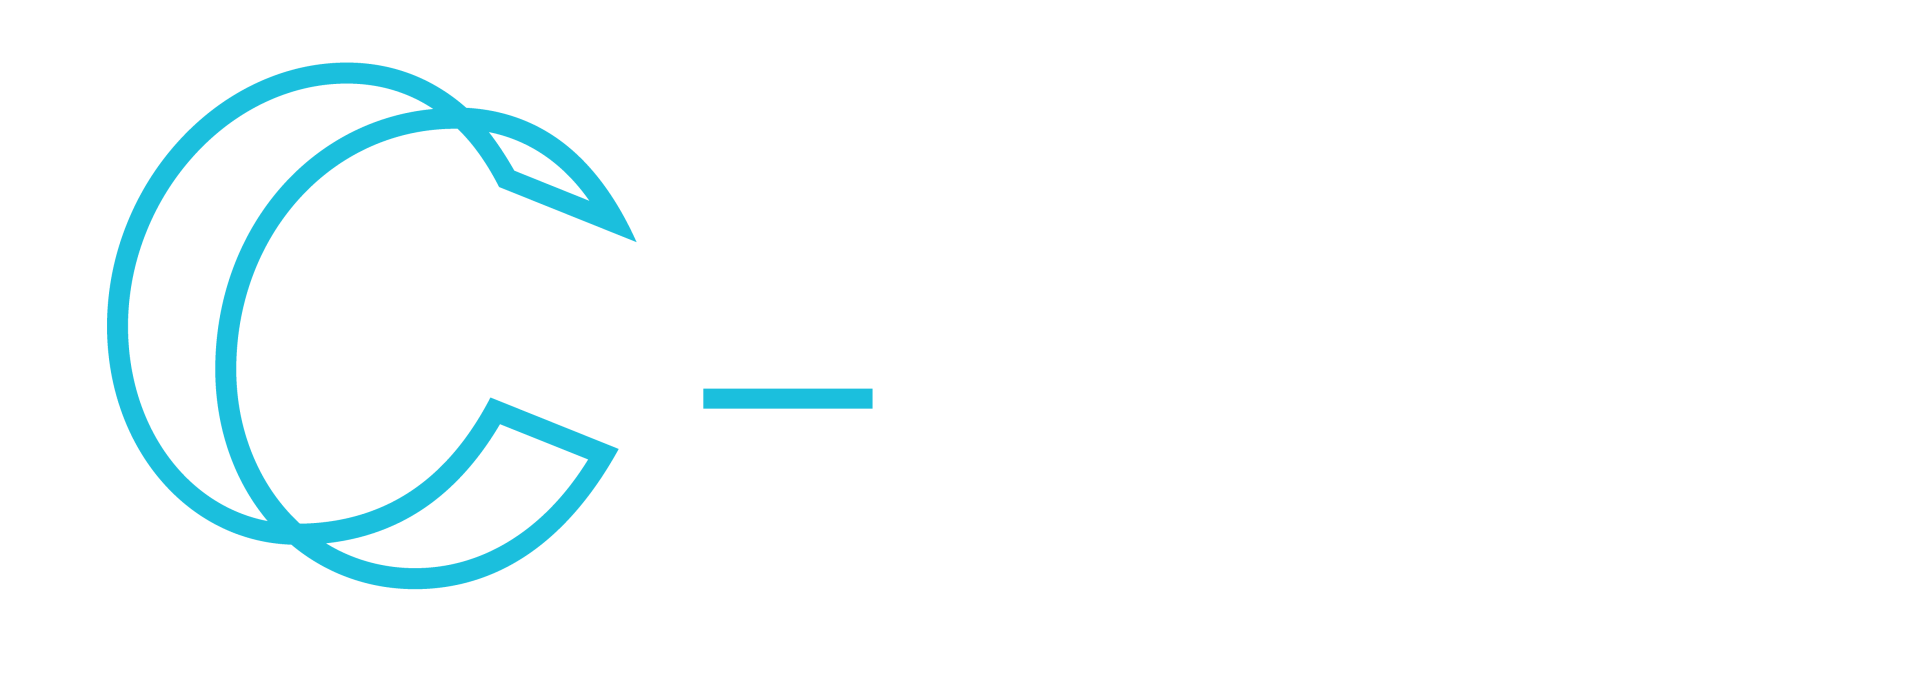 Chloe on Cirby Apartments logo